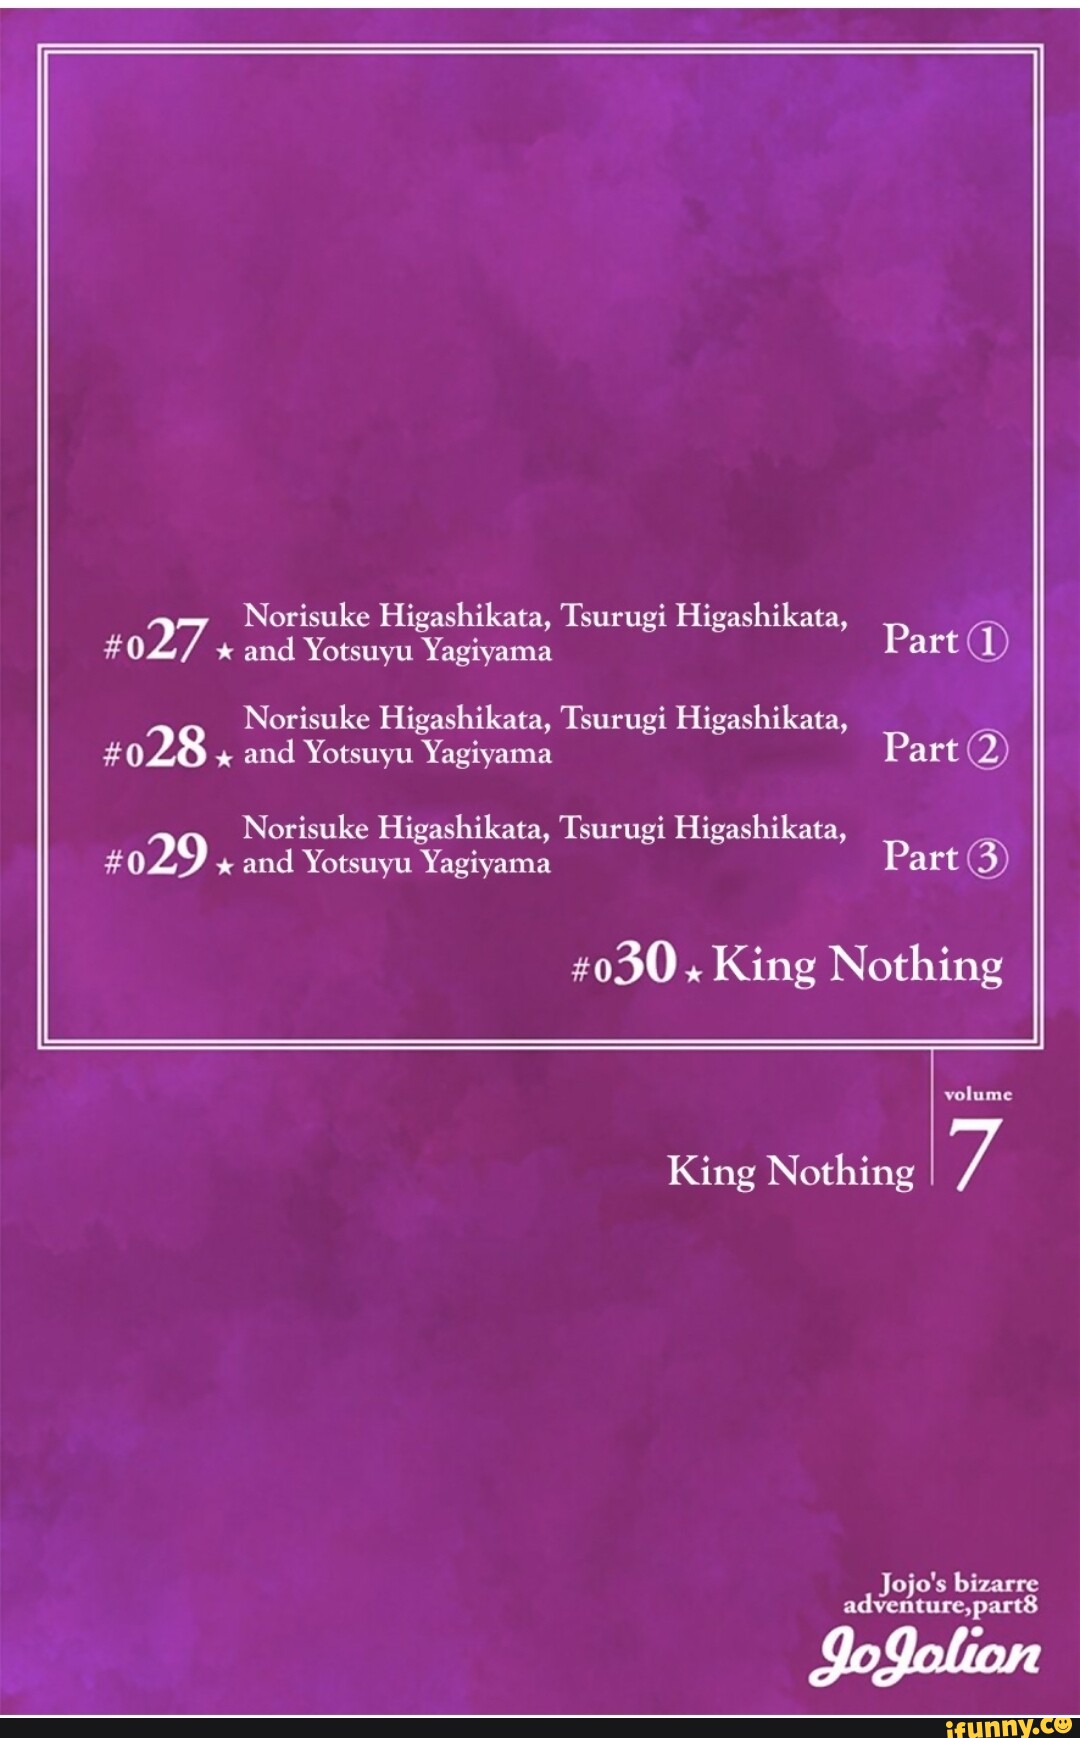 King Nothing - JoJo's Bizarre Encyclopedia